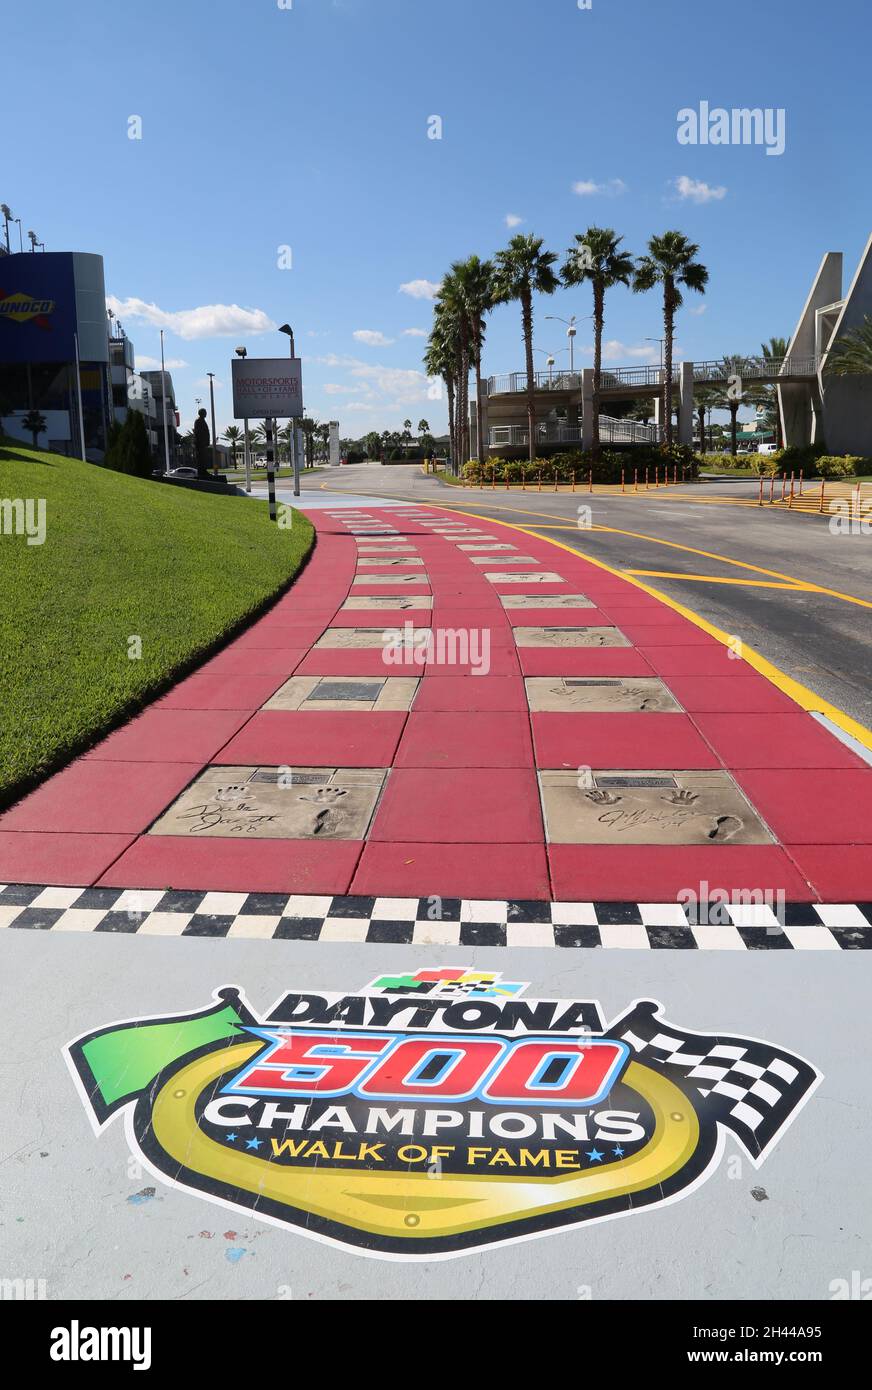 Daytona 500 Champions Walk of Fame en Daytona International Speedway, Daytona Beach, Florida Foto de stock